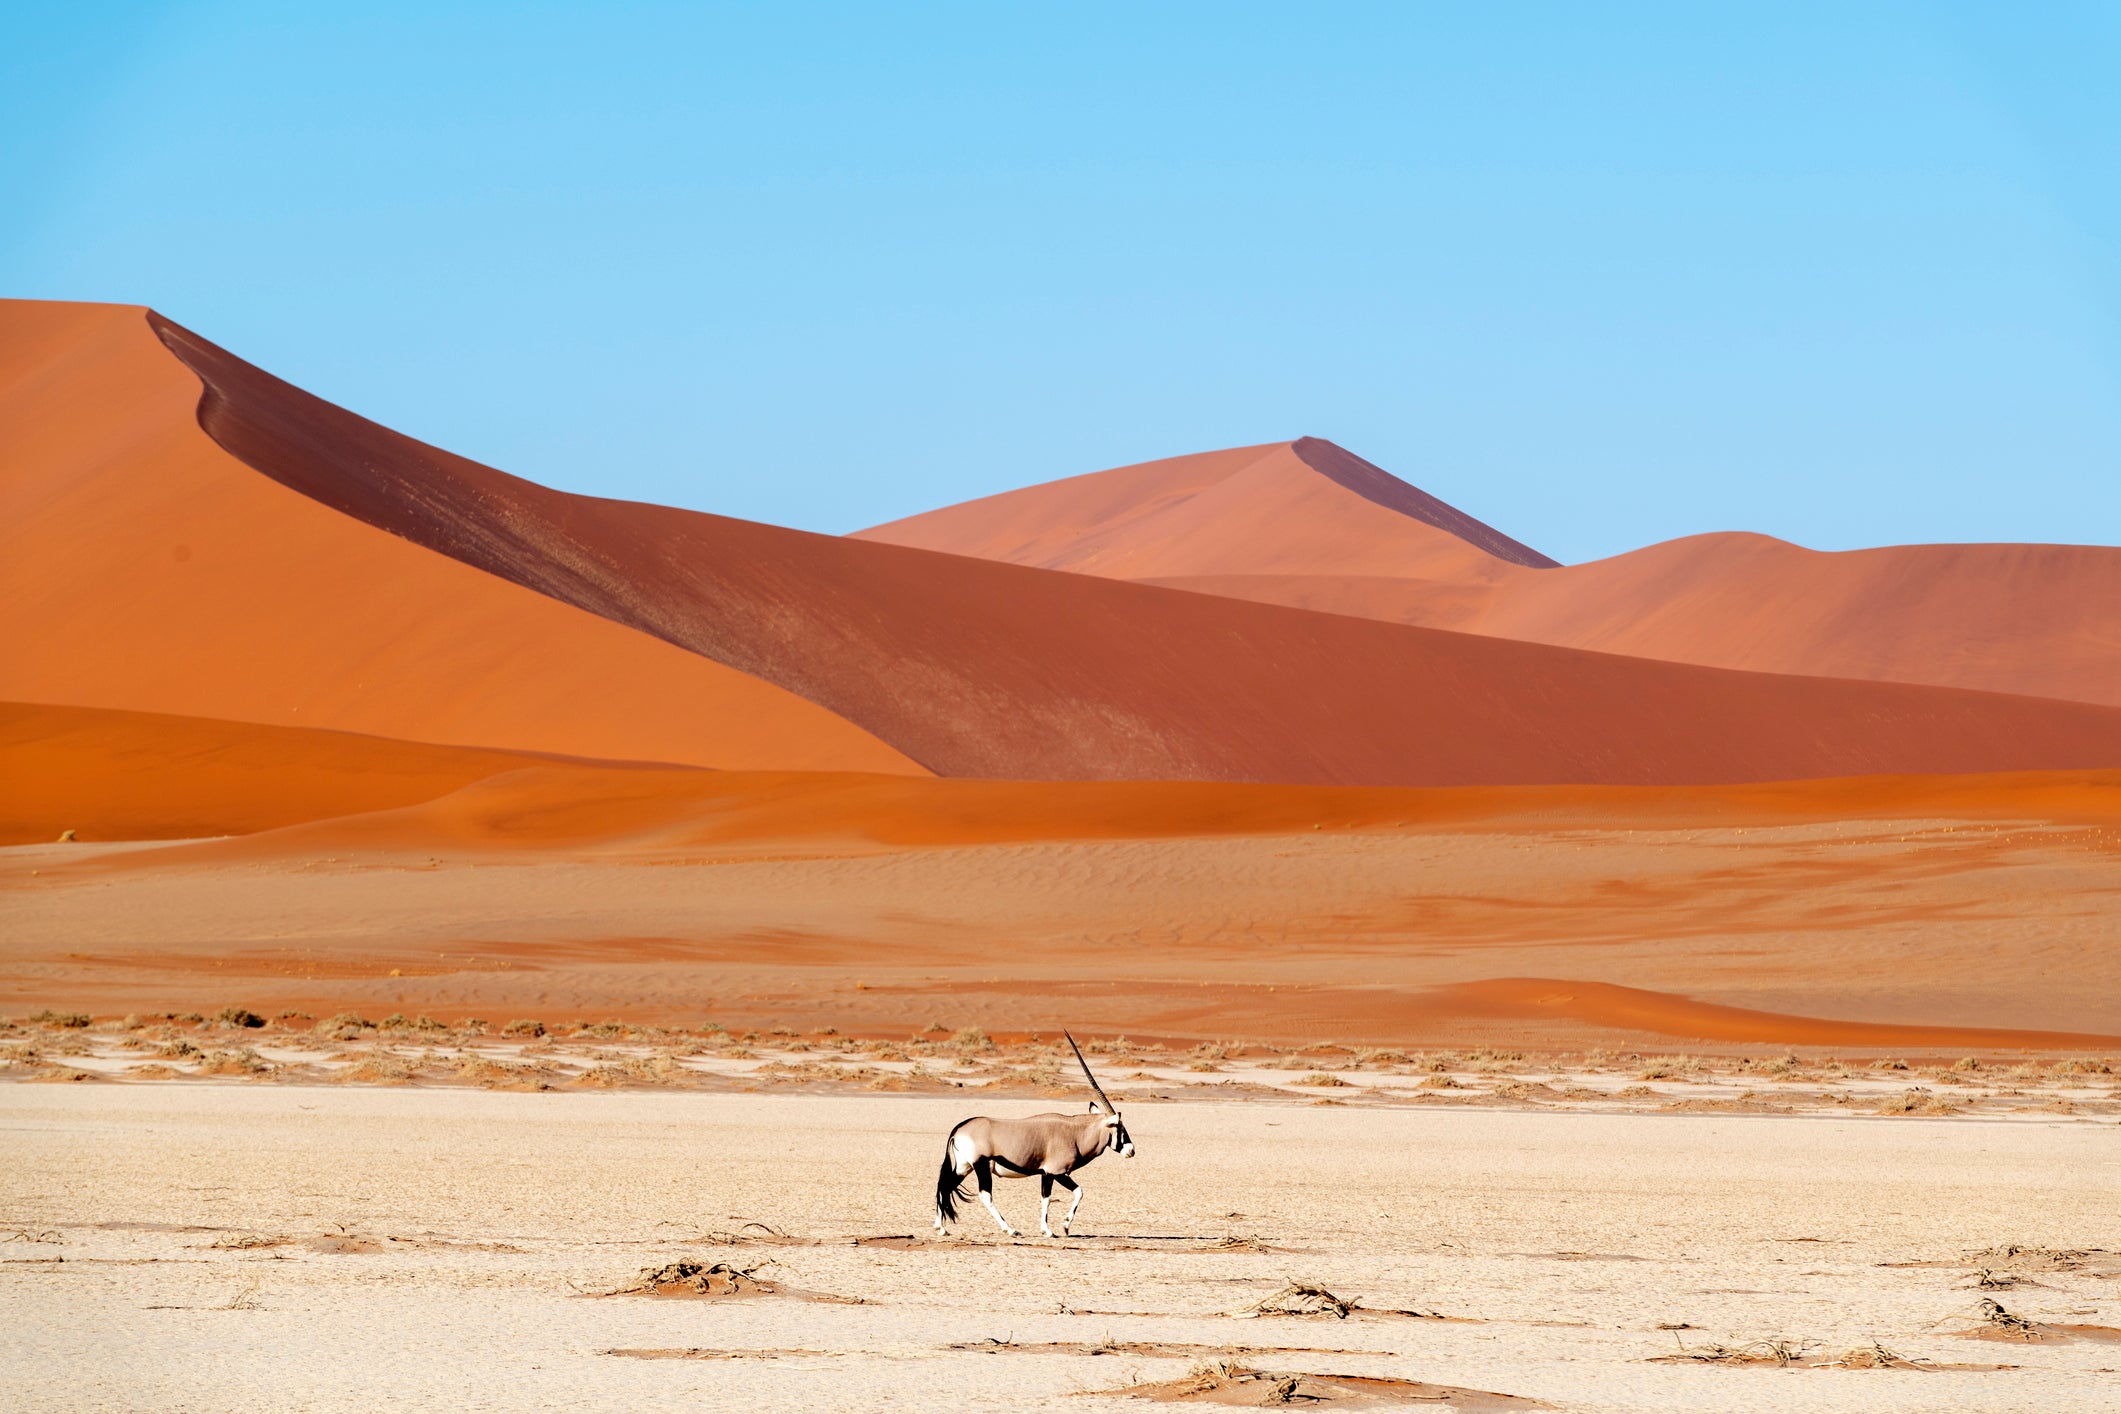 An oryx in the Namib Desert